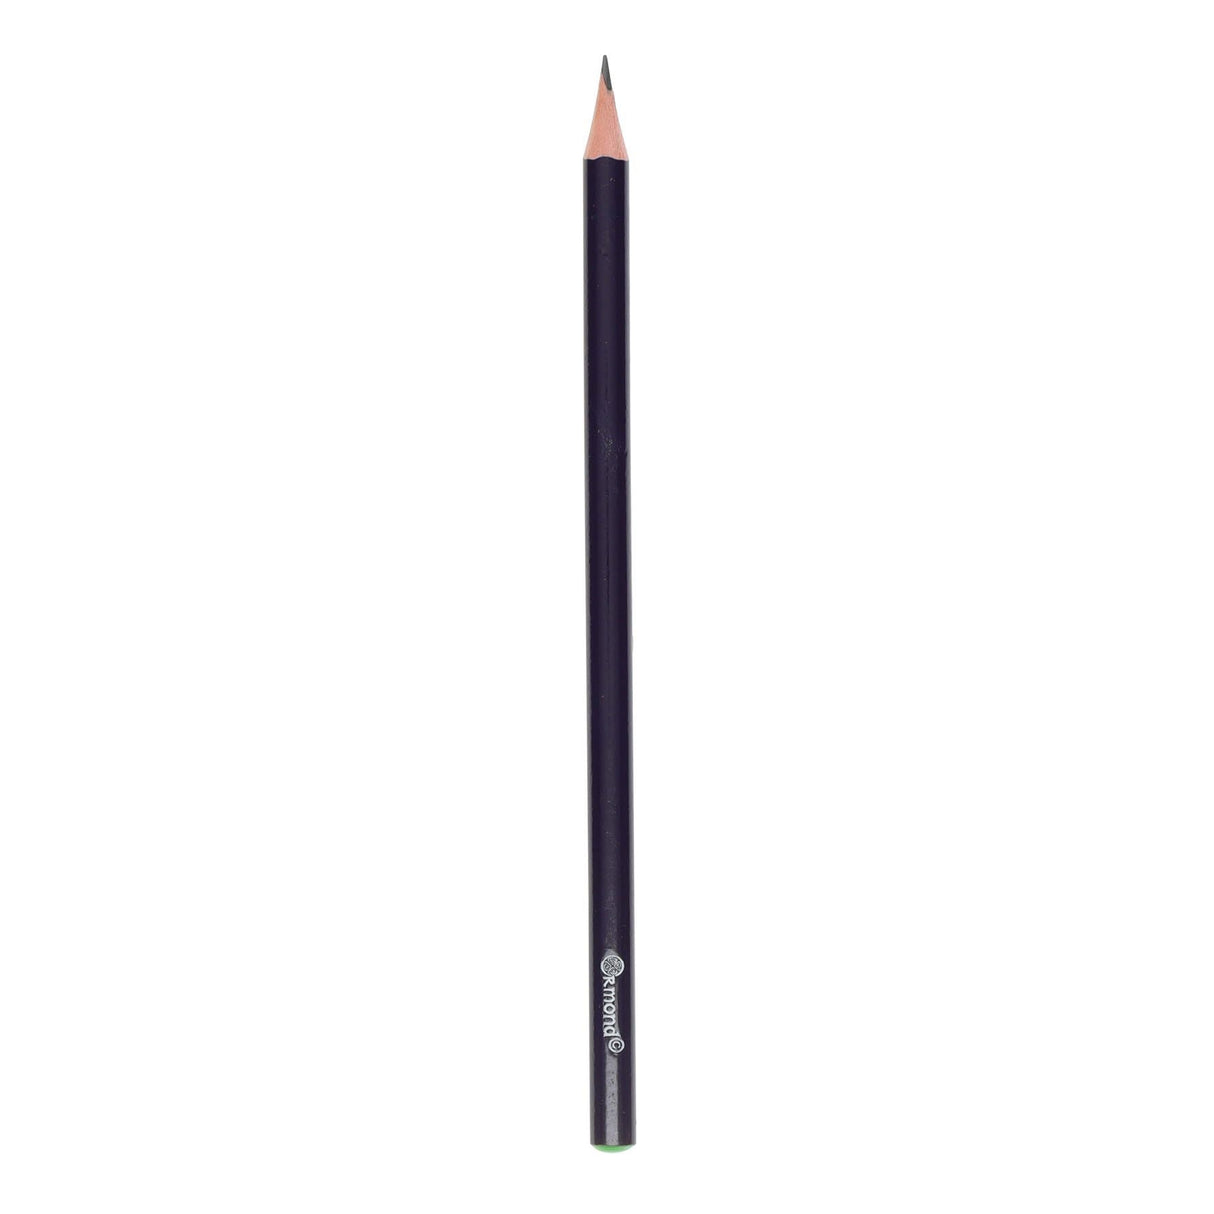 Ormond Triangular Junior Grip Pencils - HB | Stationery Shop UK